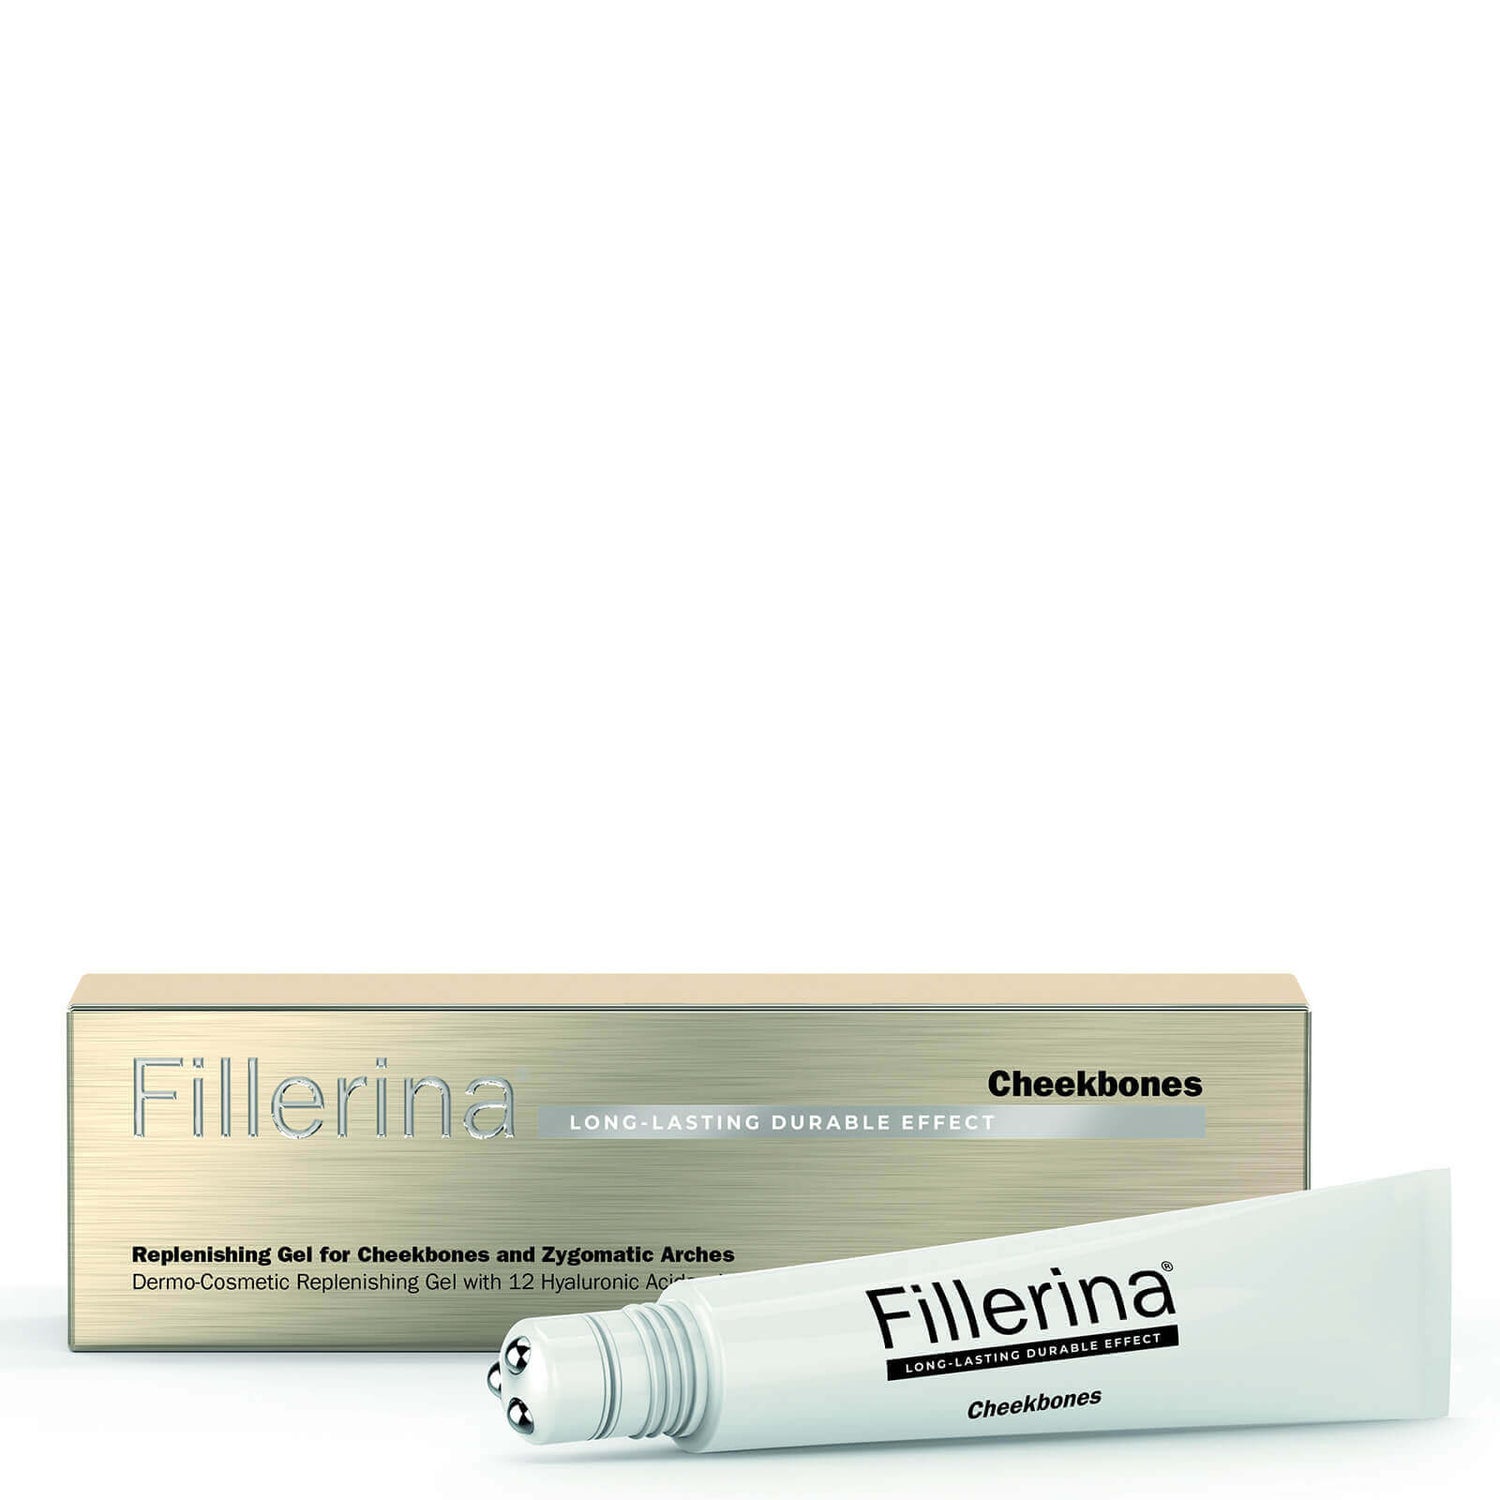 Fillerina Long Lasting Durable Effect Lip Cheekbones Grade 3 0.5oz.